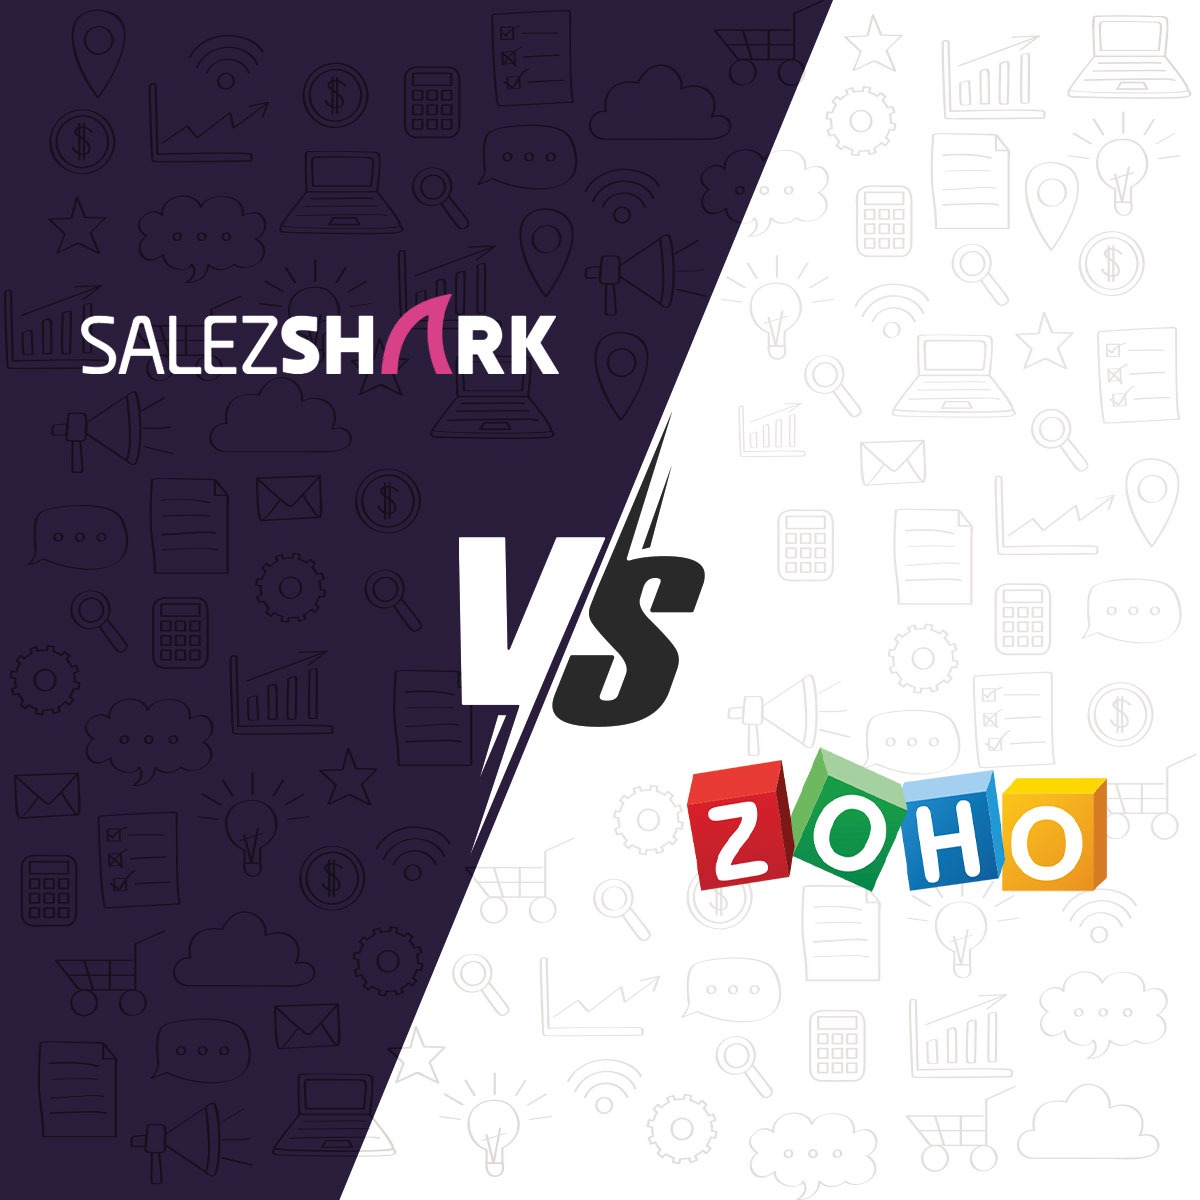 email marketing tool, SalezShark